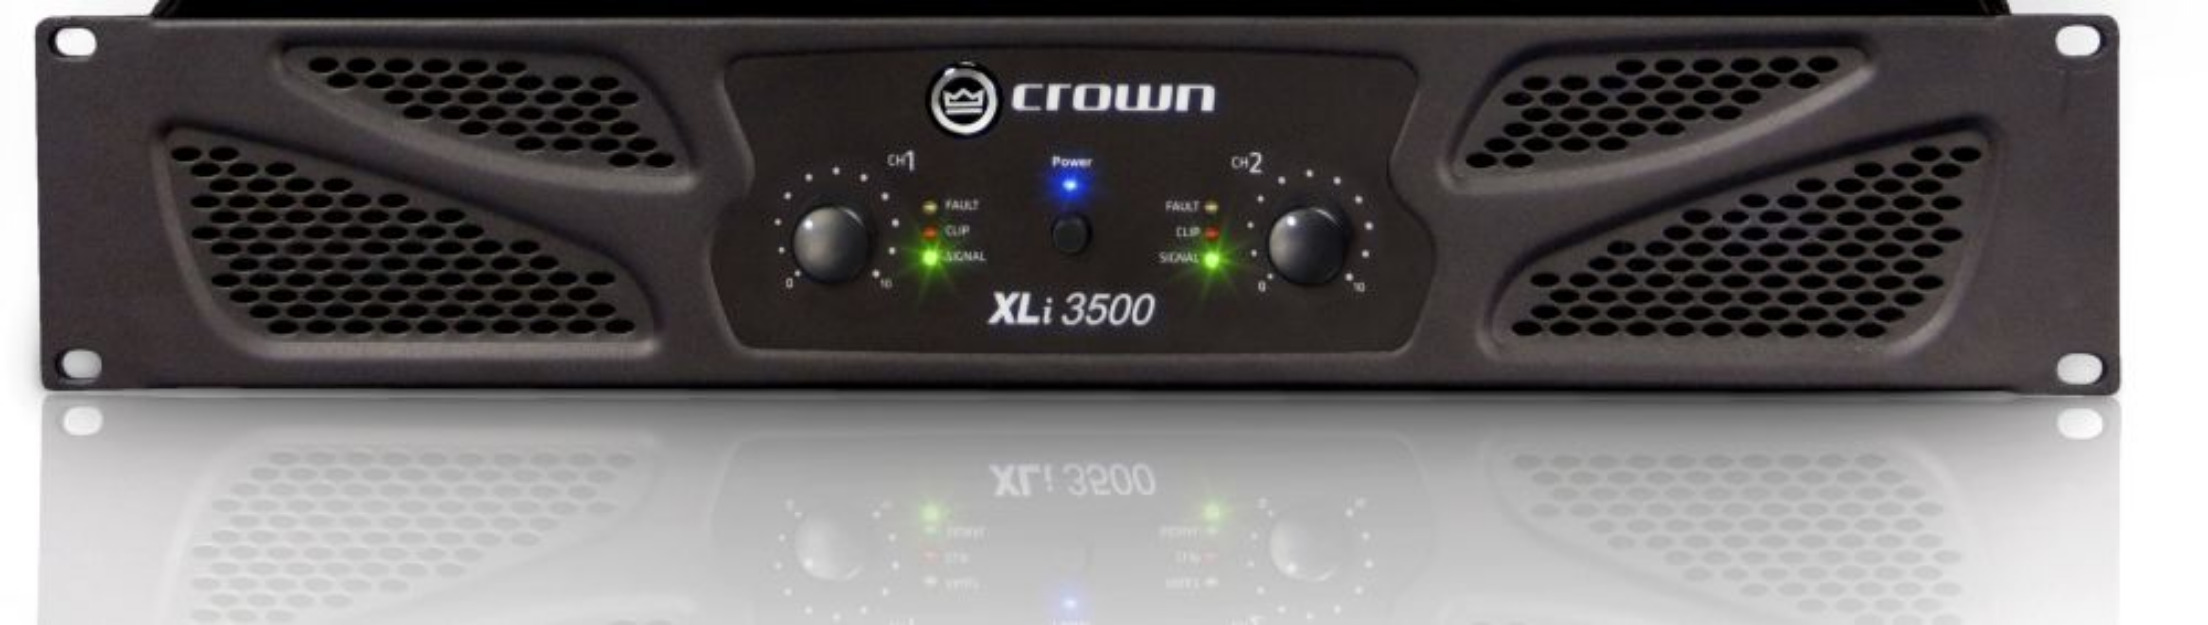 Crown - xli3500